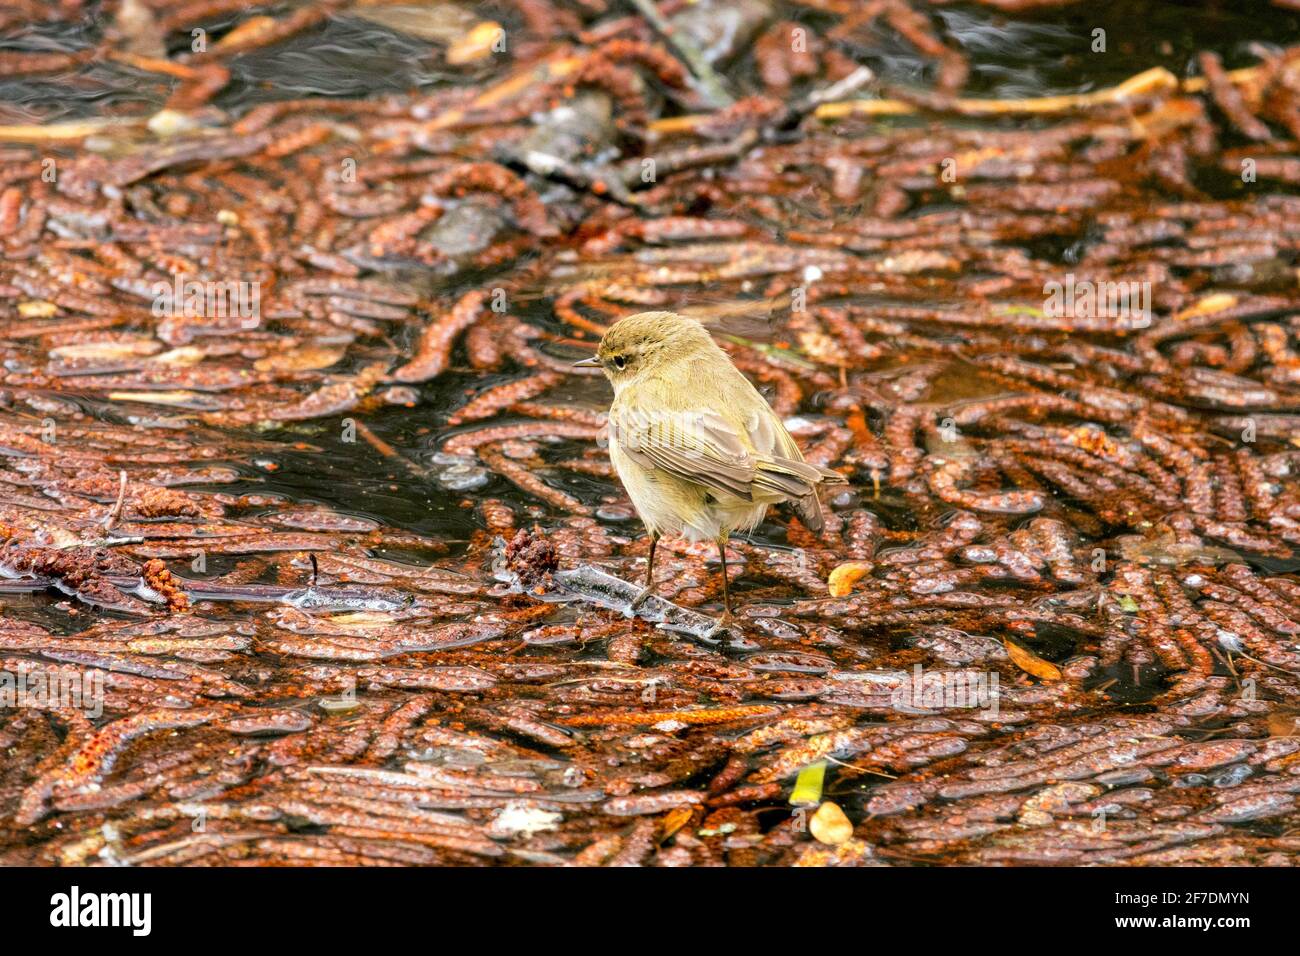 Willow warbler bird on fallen catkins in water Phylloscopus trochilus Stock Photo